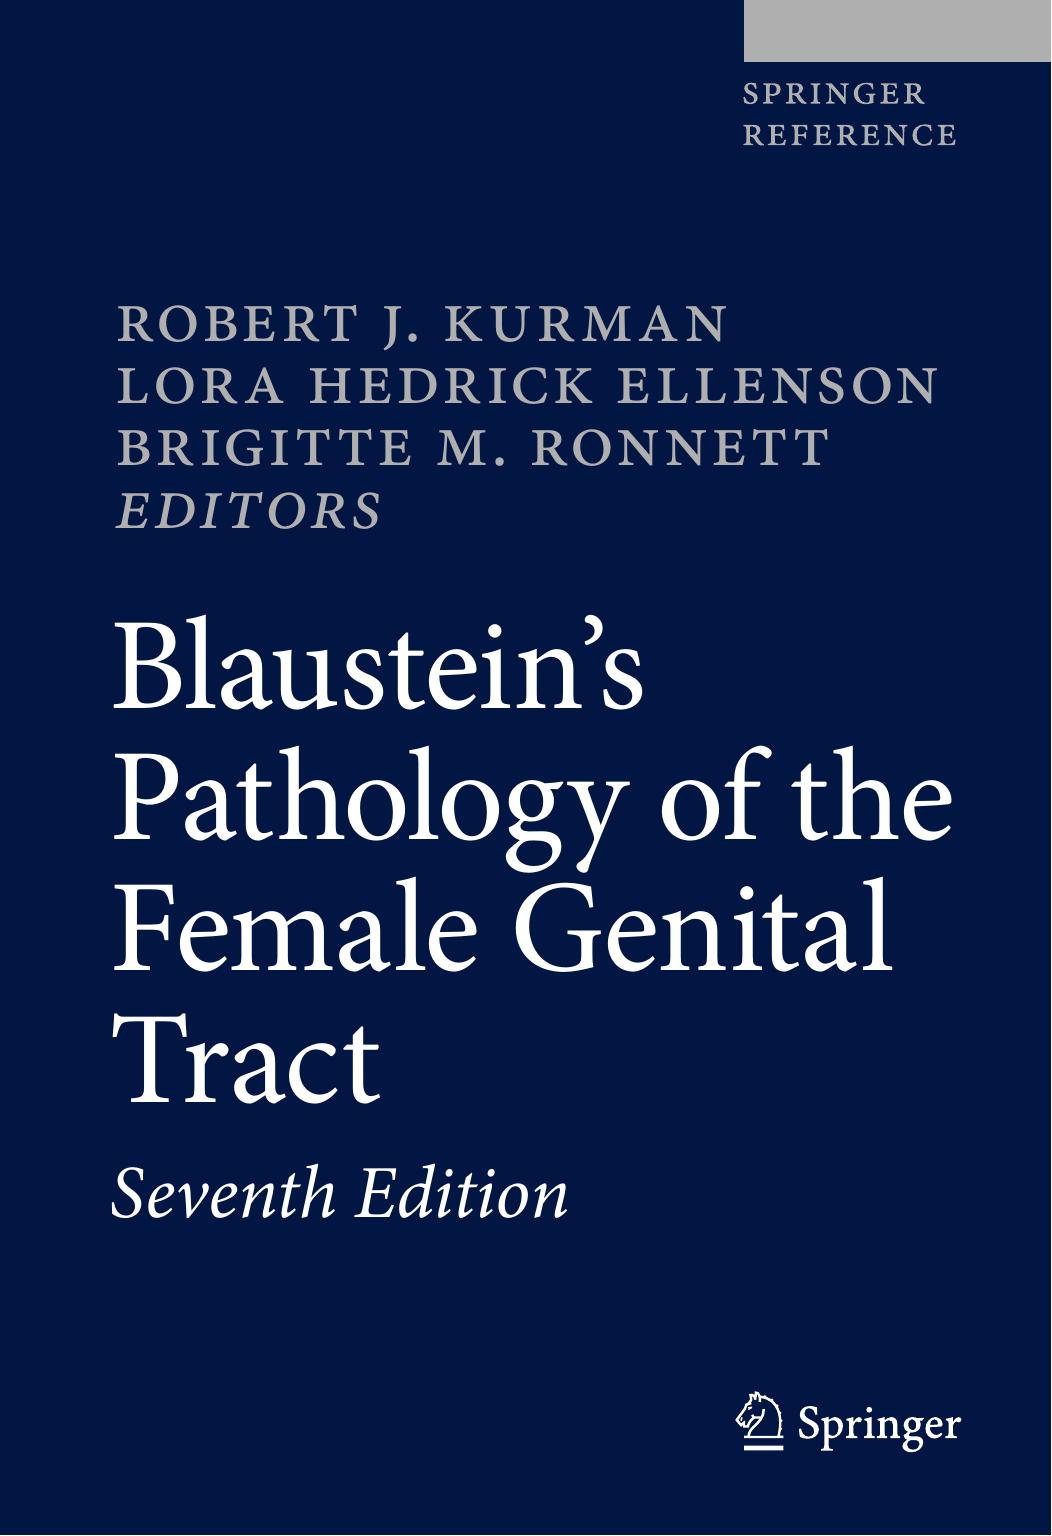 Blaustein's Pathology of the Female Genital Tract 7th.jpg